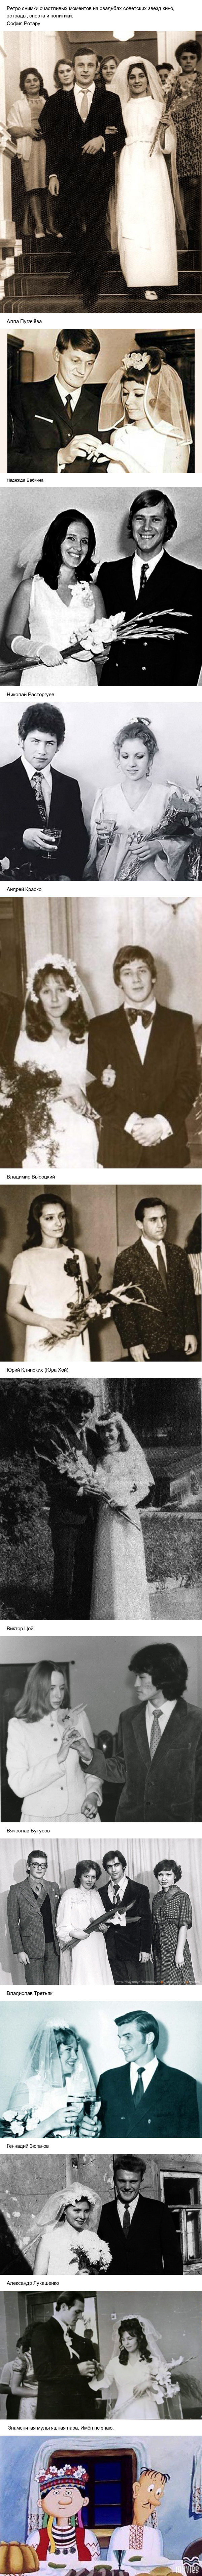 Rare wedding photos of Soviet celebrities. - Wedding photography, Celebrities, Longpost, Story, Rare photos, Old photo